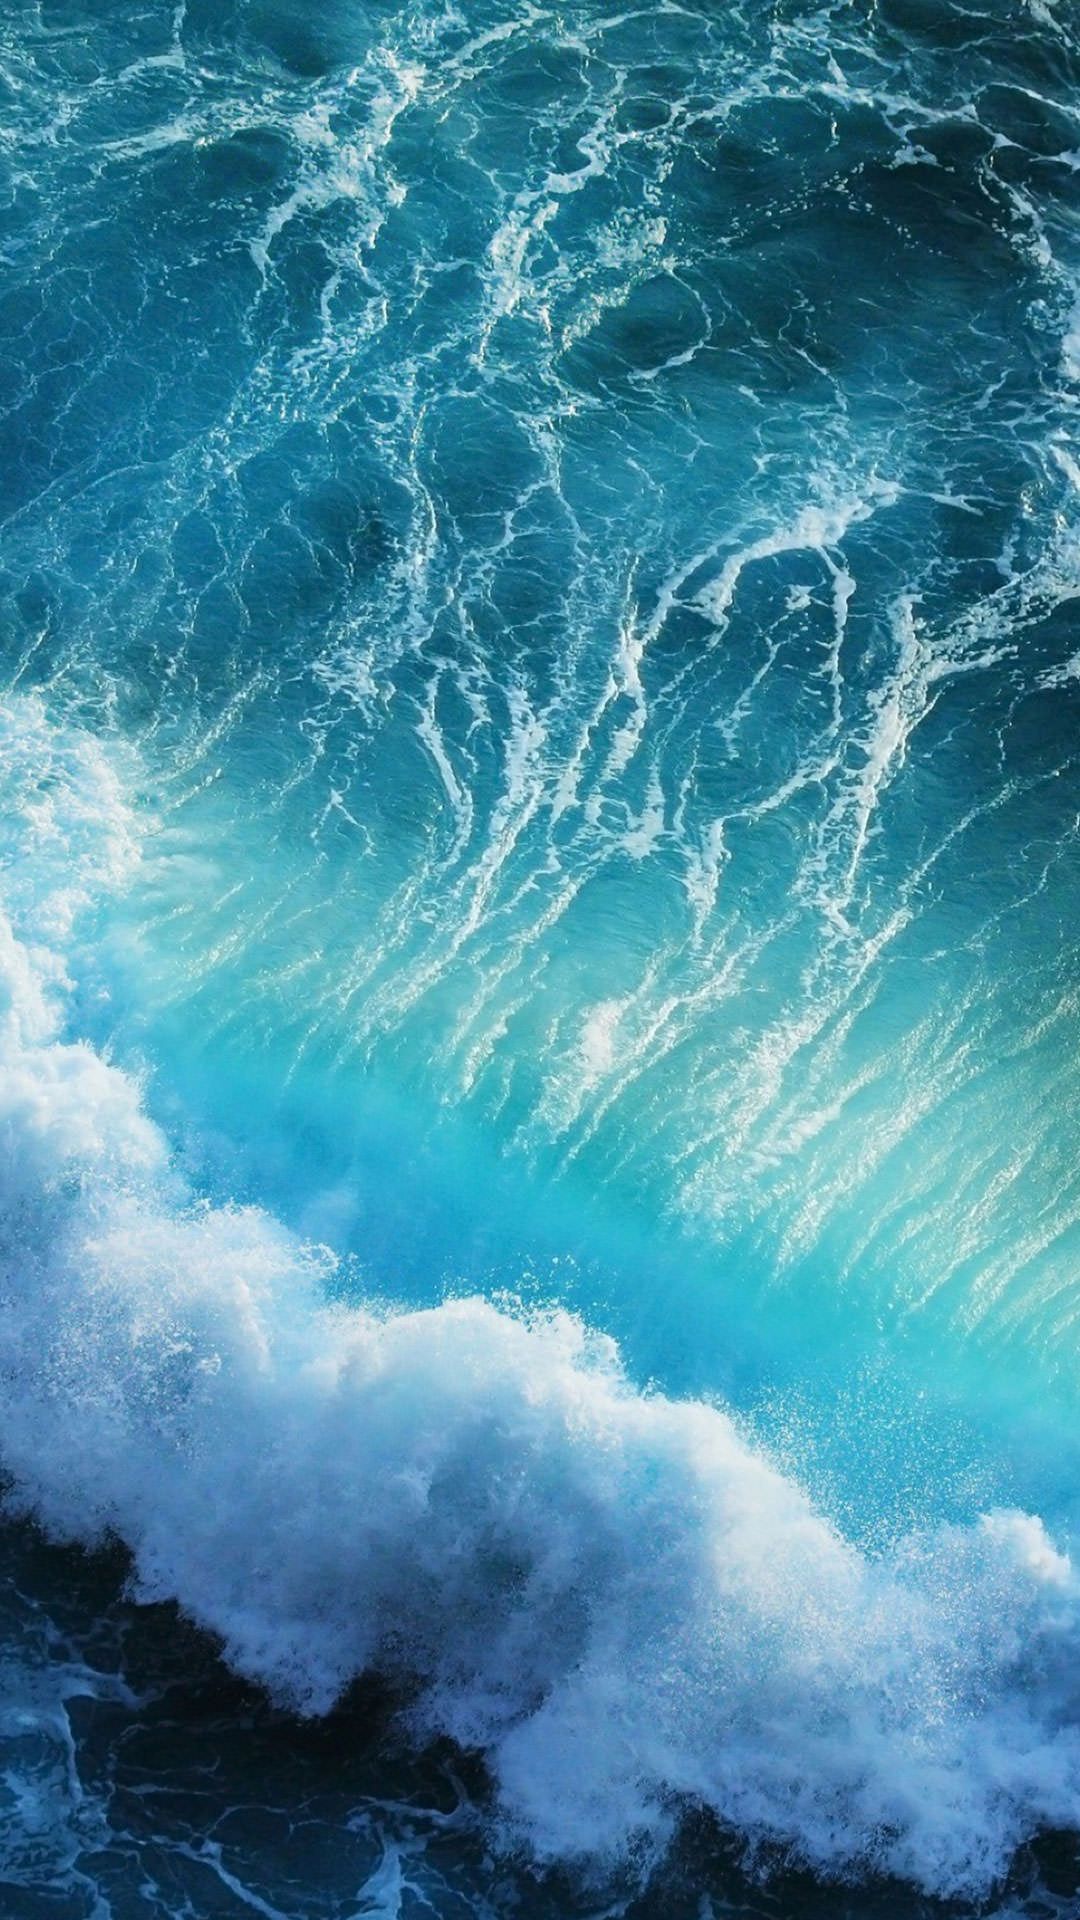 waves iphone wallpaper